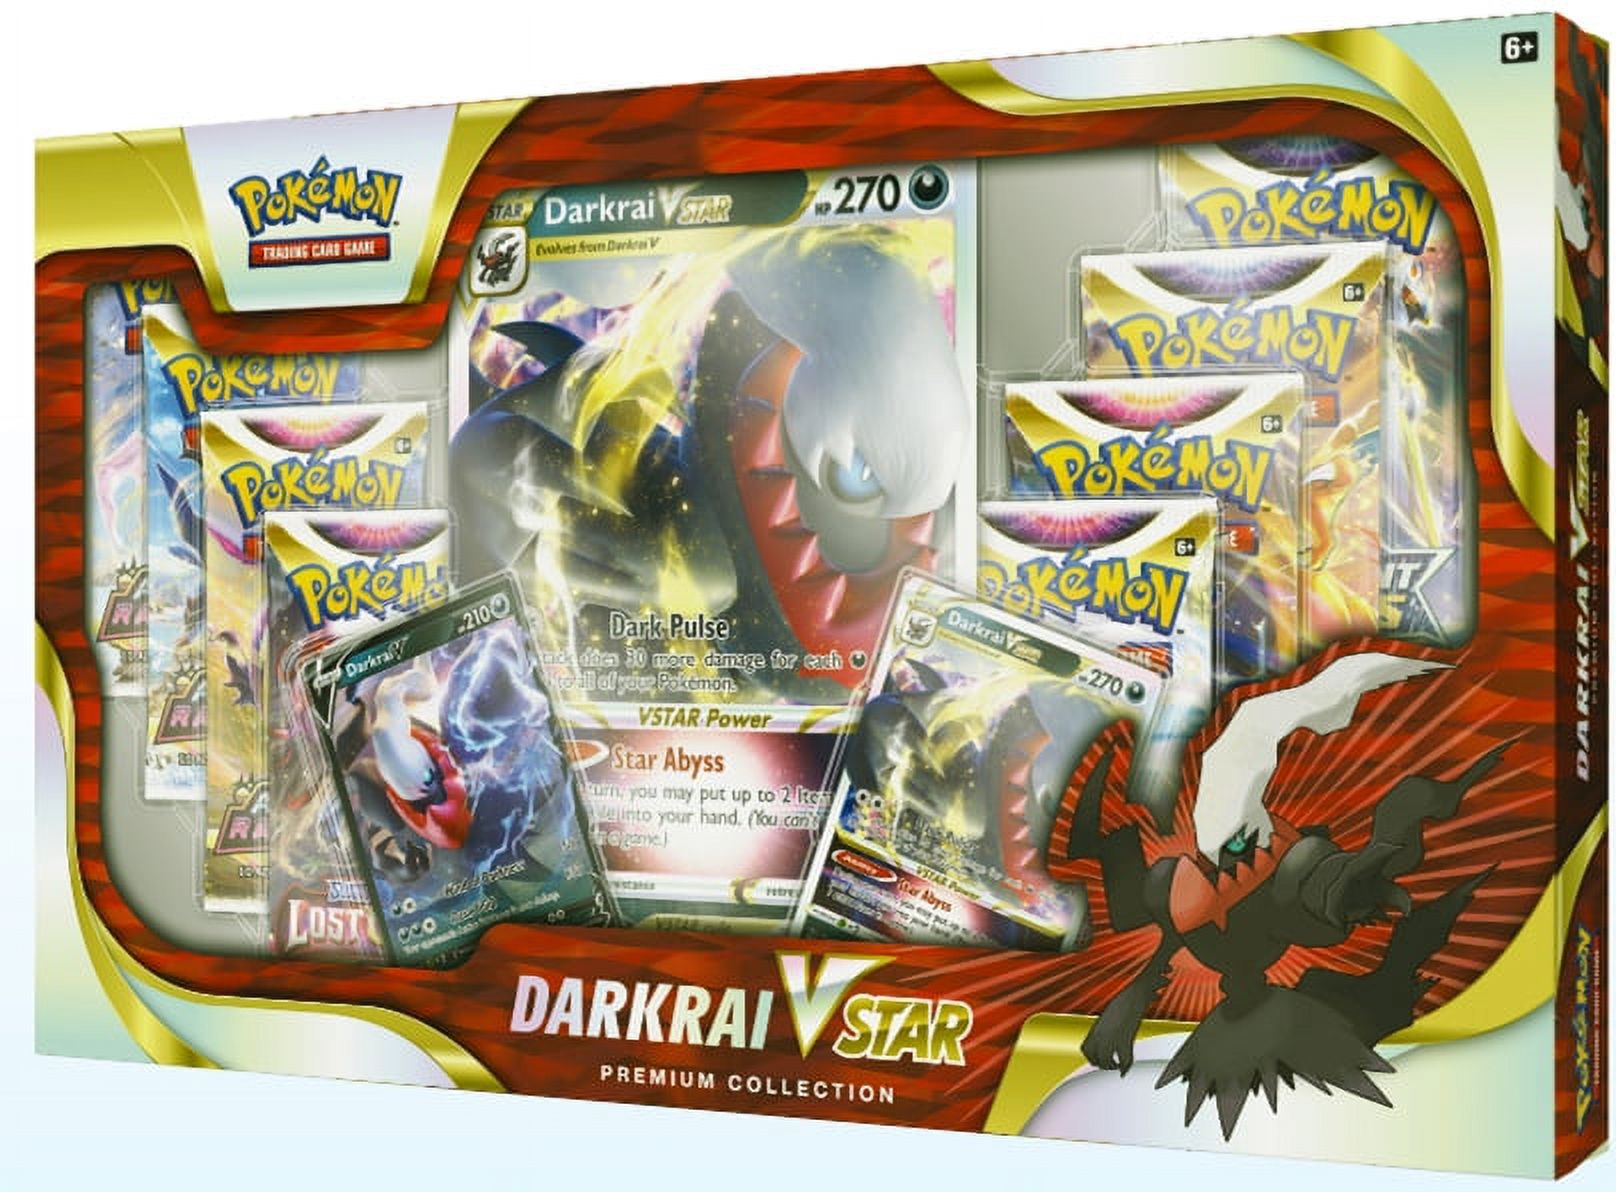 Pokemon Cards: Darkrai VSTAR Premium Collection Box Pokémon TCG - image 3 of 5